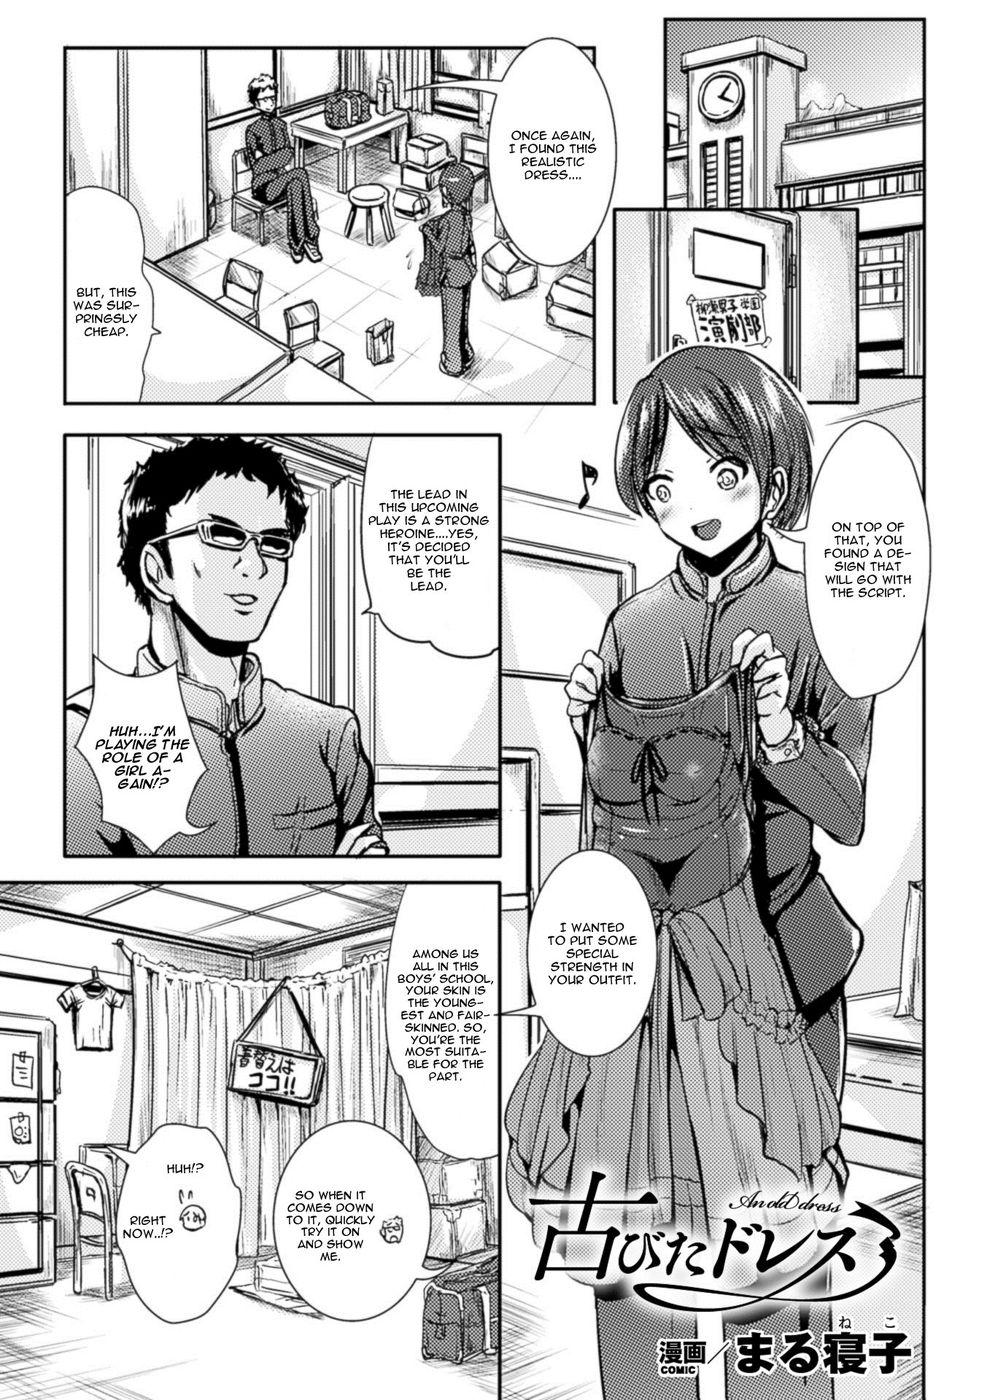 Hentai Manga Comic-An Old Dress-Read-1